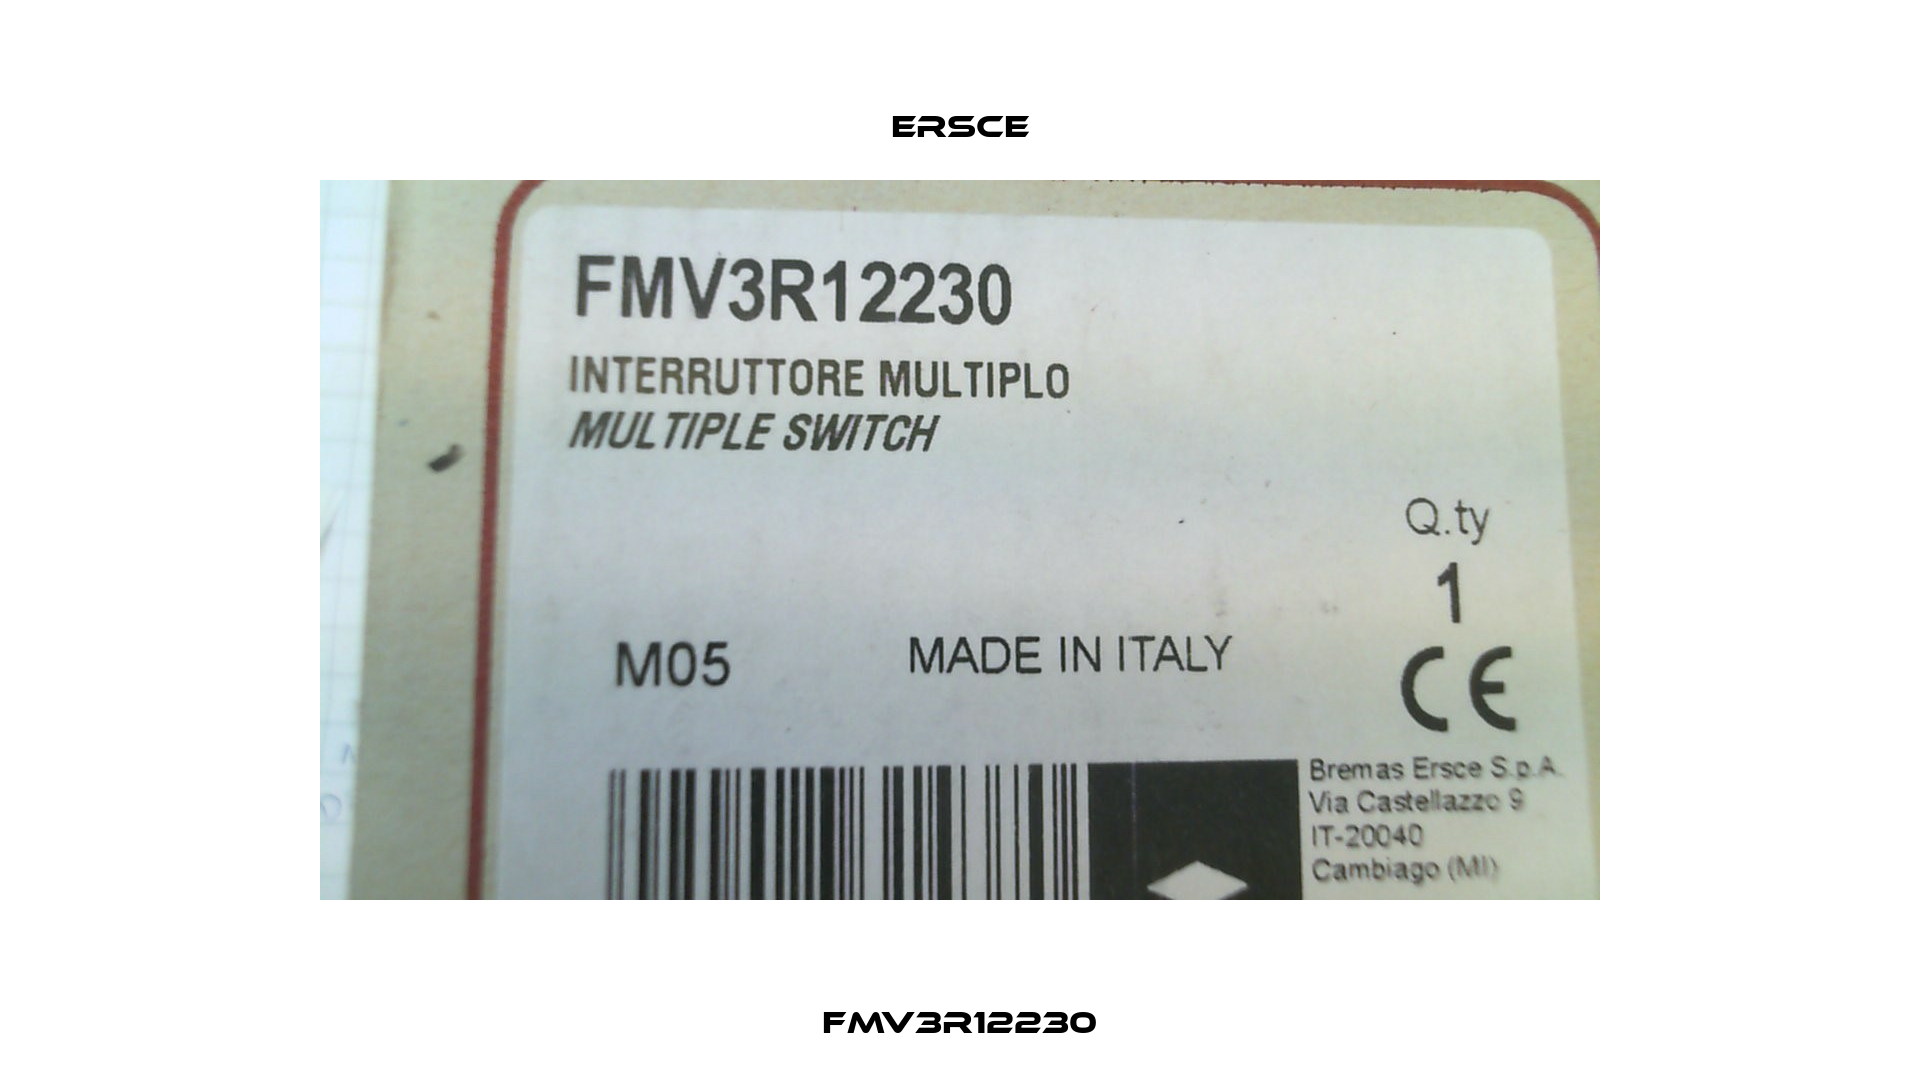 FMV3R12230 Ersce